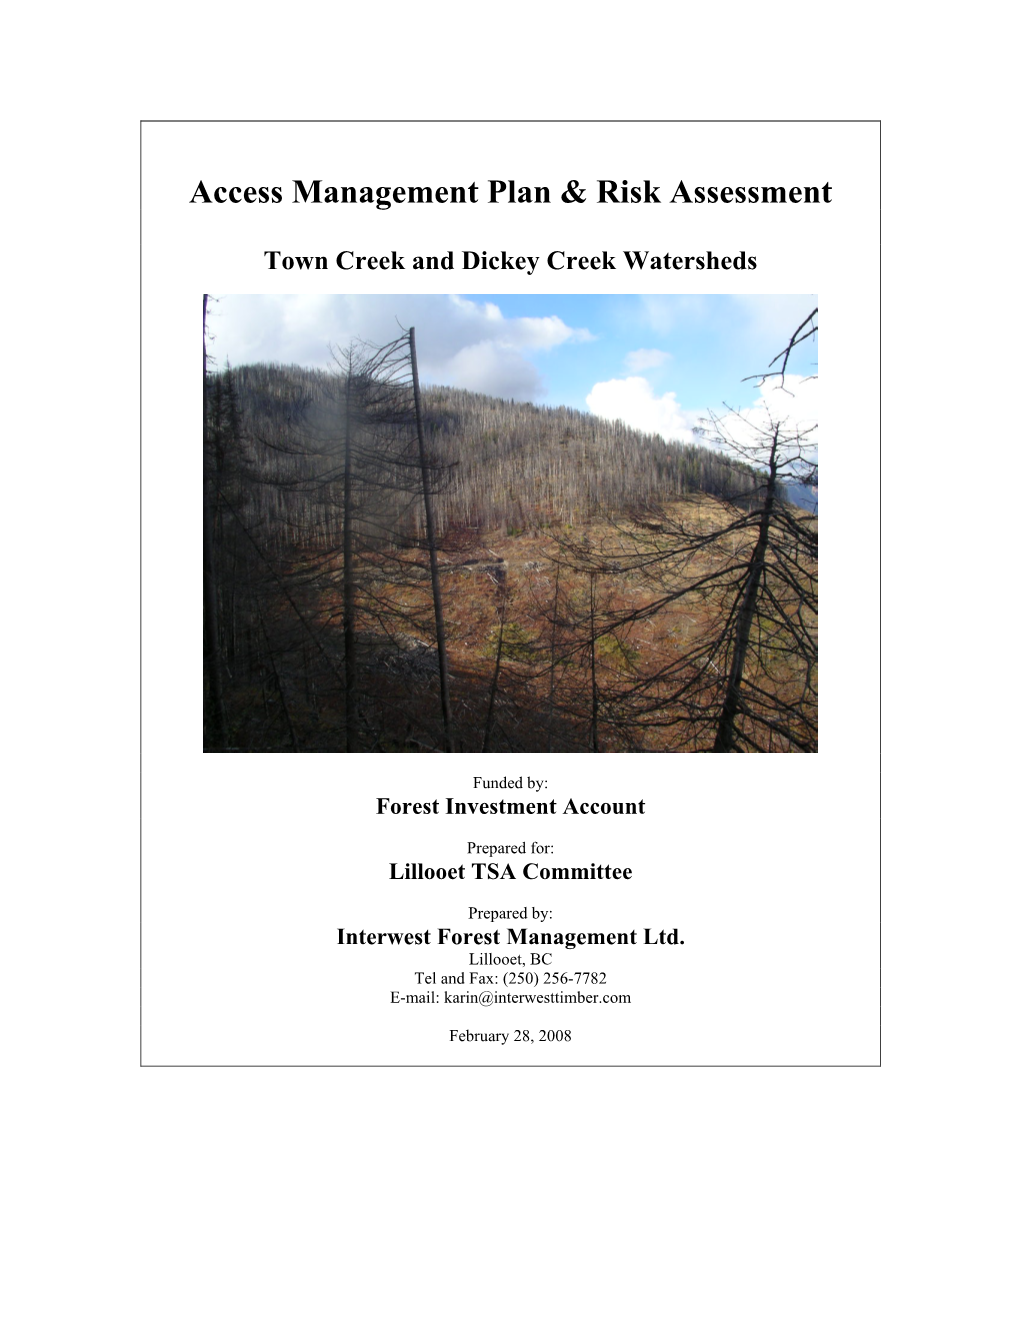 Access Management Plan & Risk Assessment Town Creek And